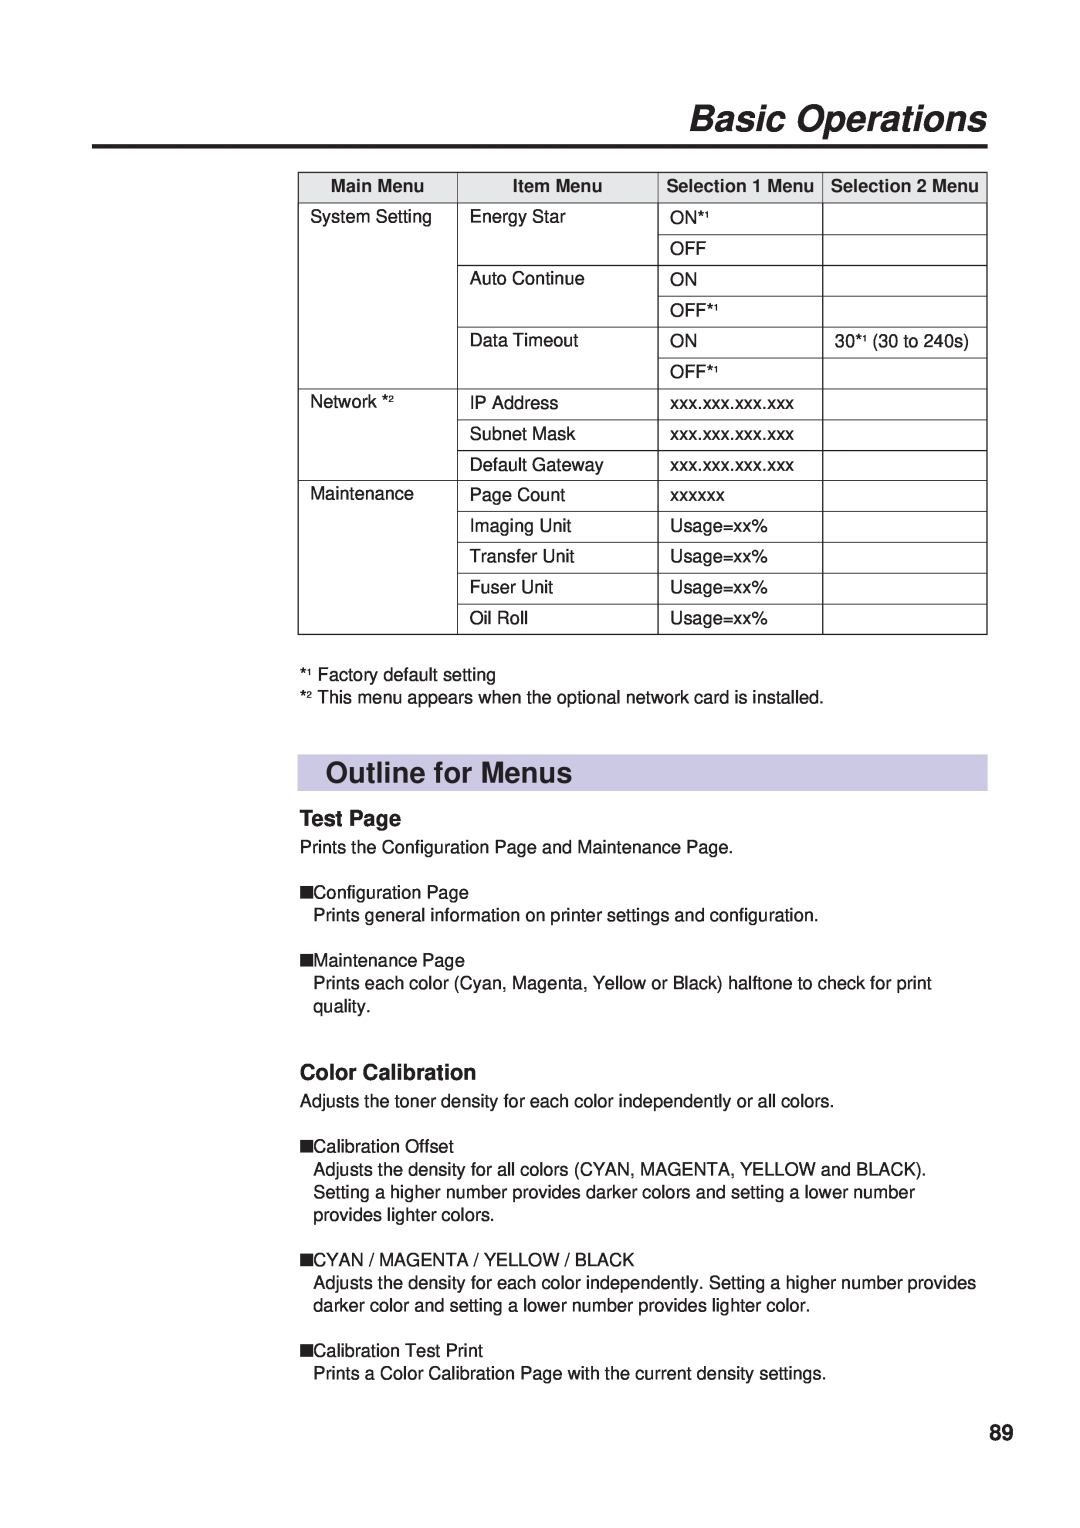 Panasonic KX-PS8000 manual Test Page, Color Calibration, Basic Operations, Outline for Menus, Main Menu, Item Menu 